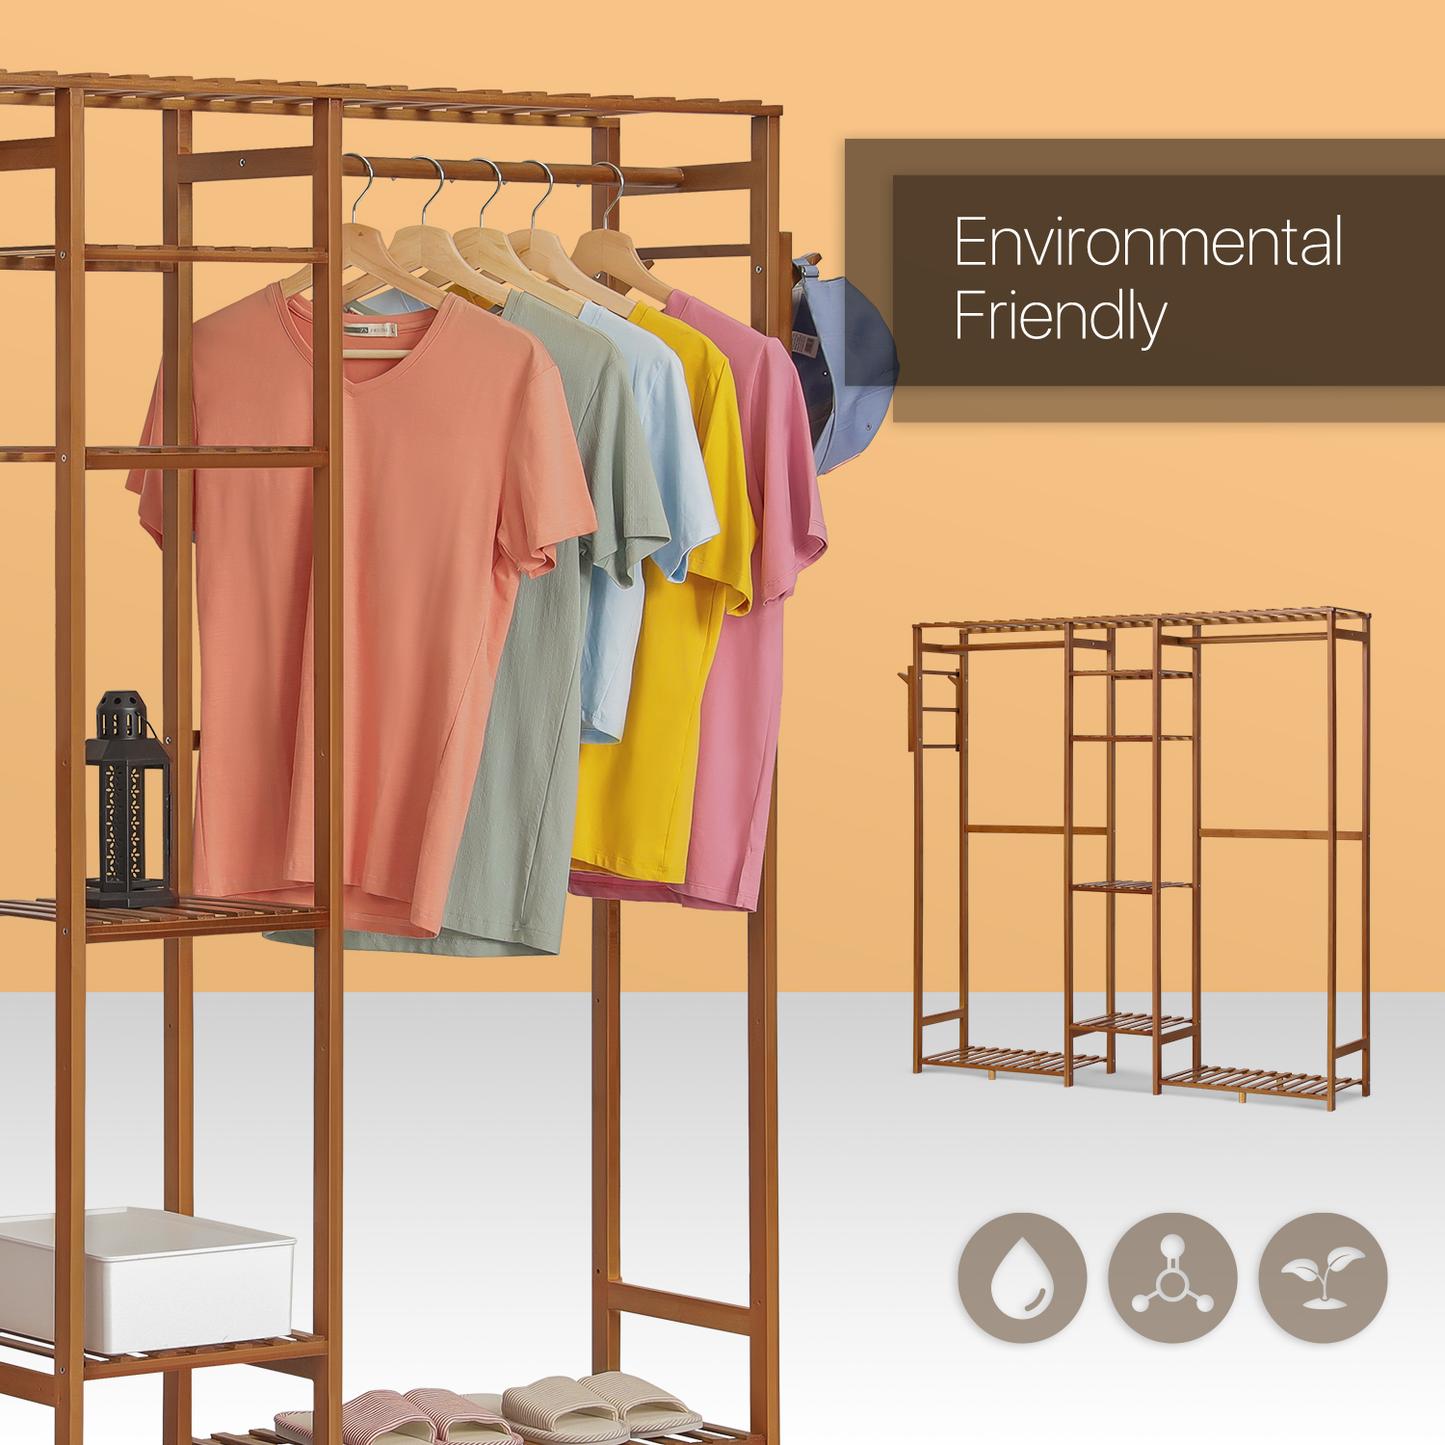 Garment Cabinet Clothes Organizer - Double Rack